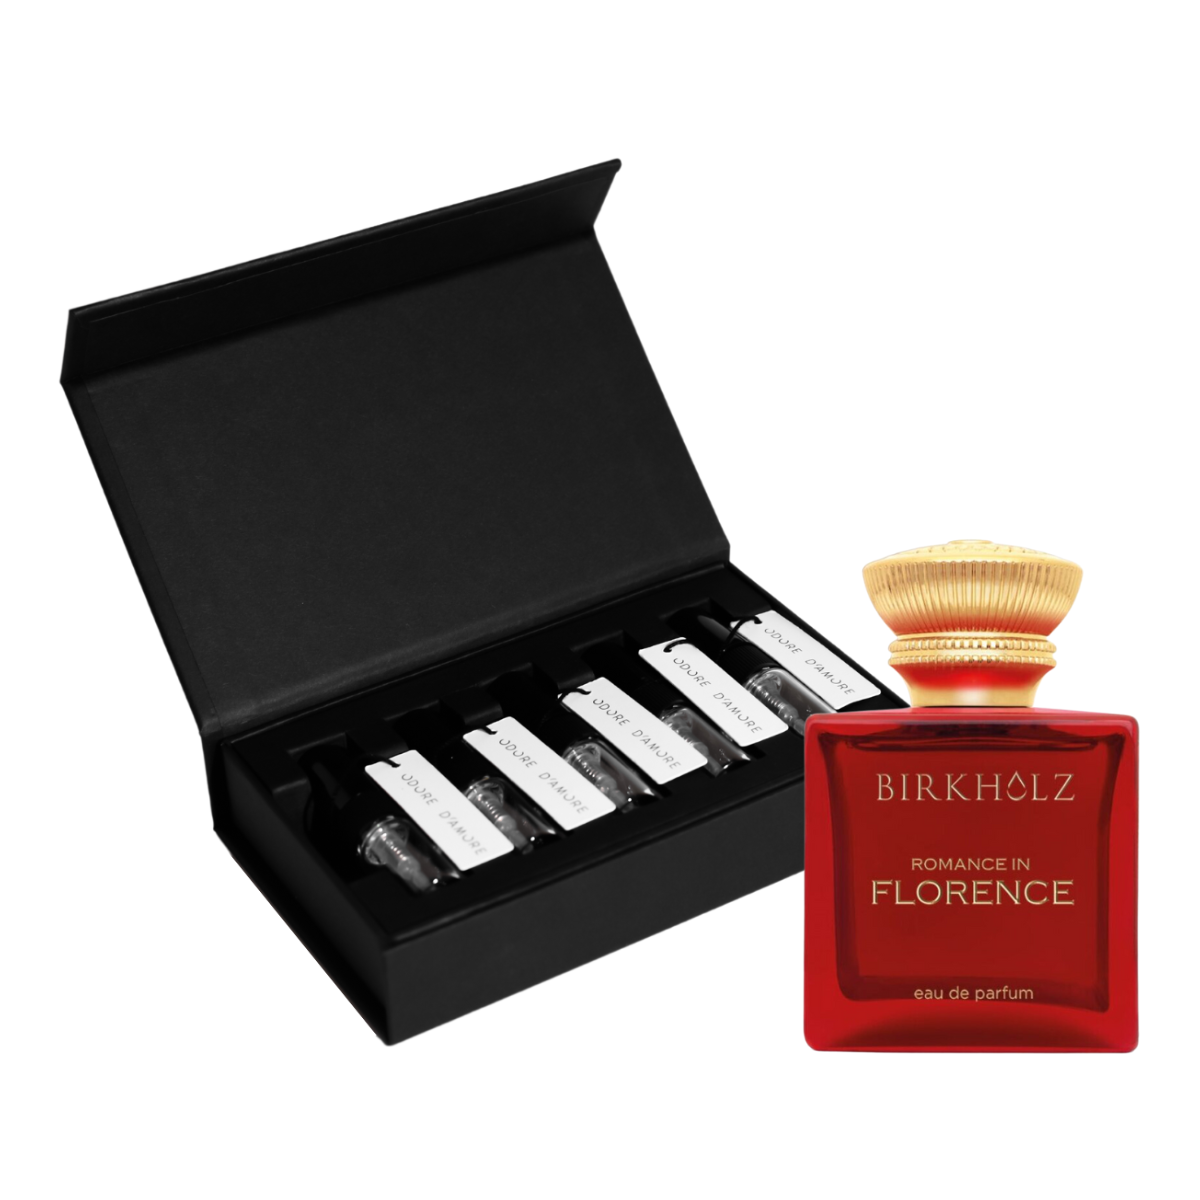 Birkholz Perfume Discovery Box No. 2